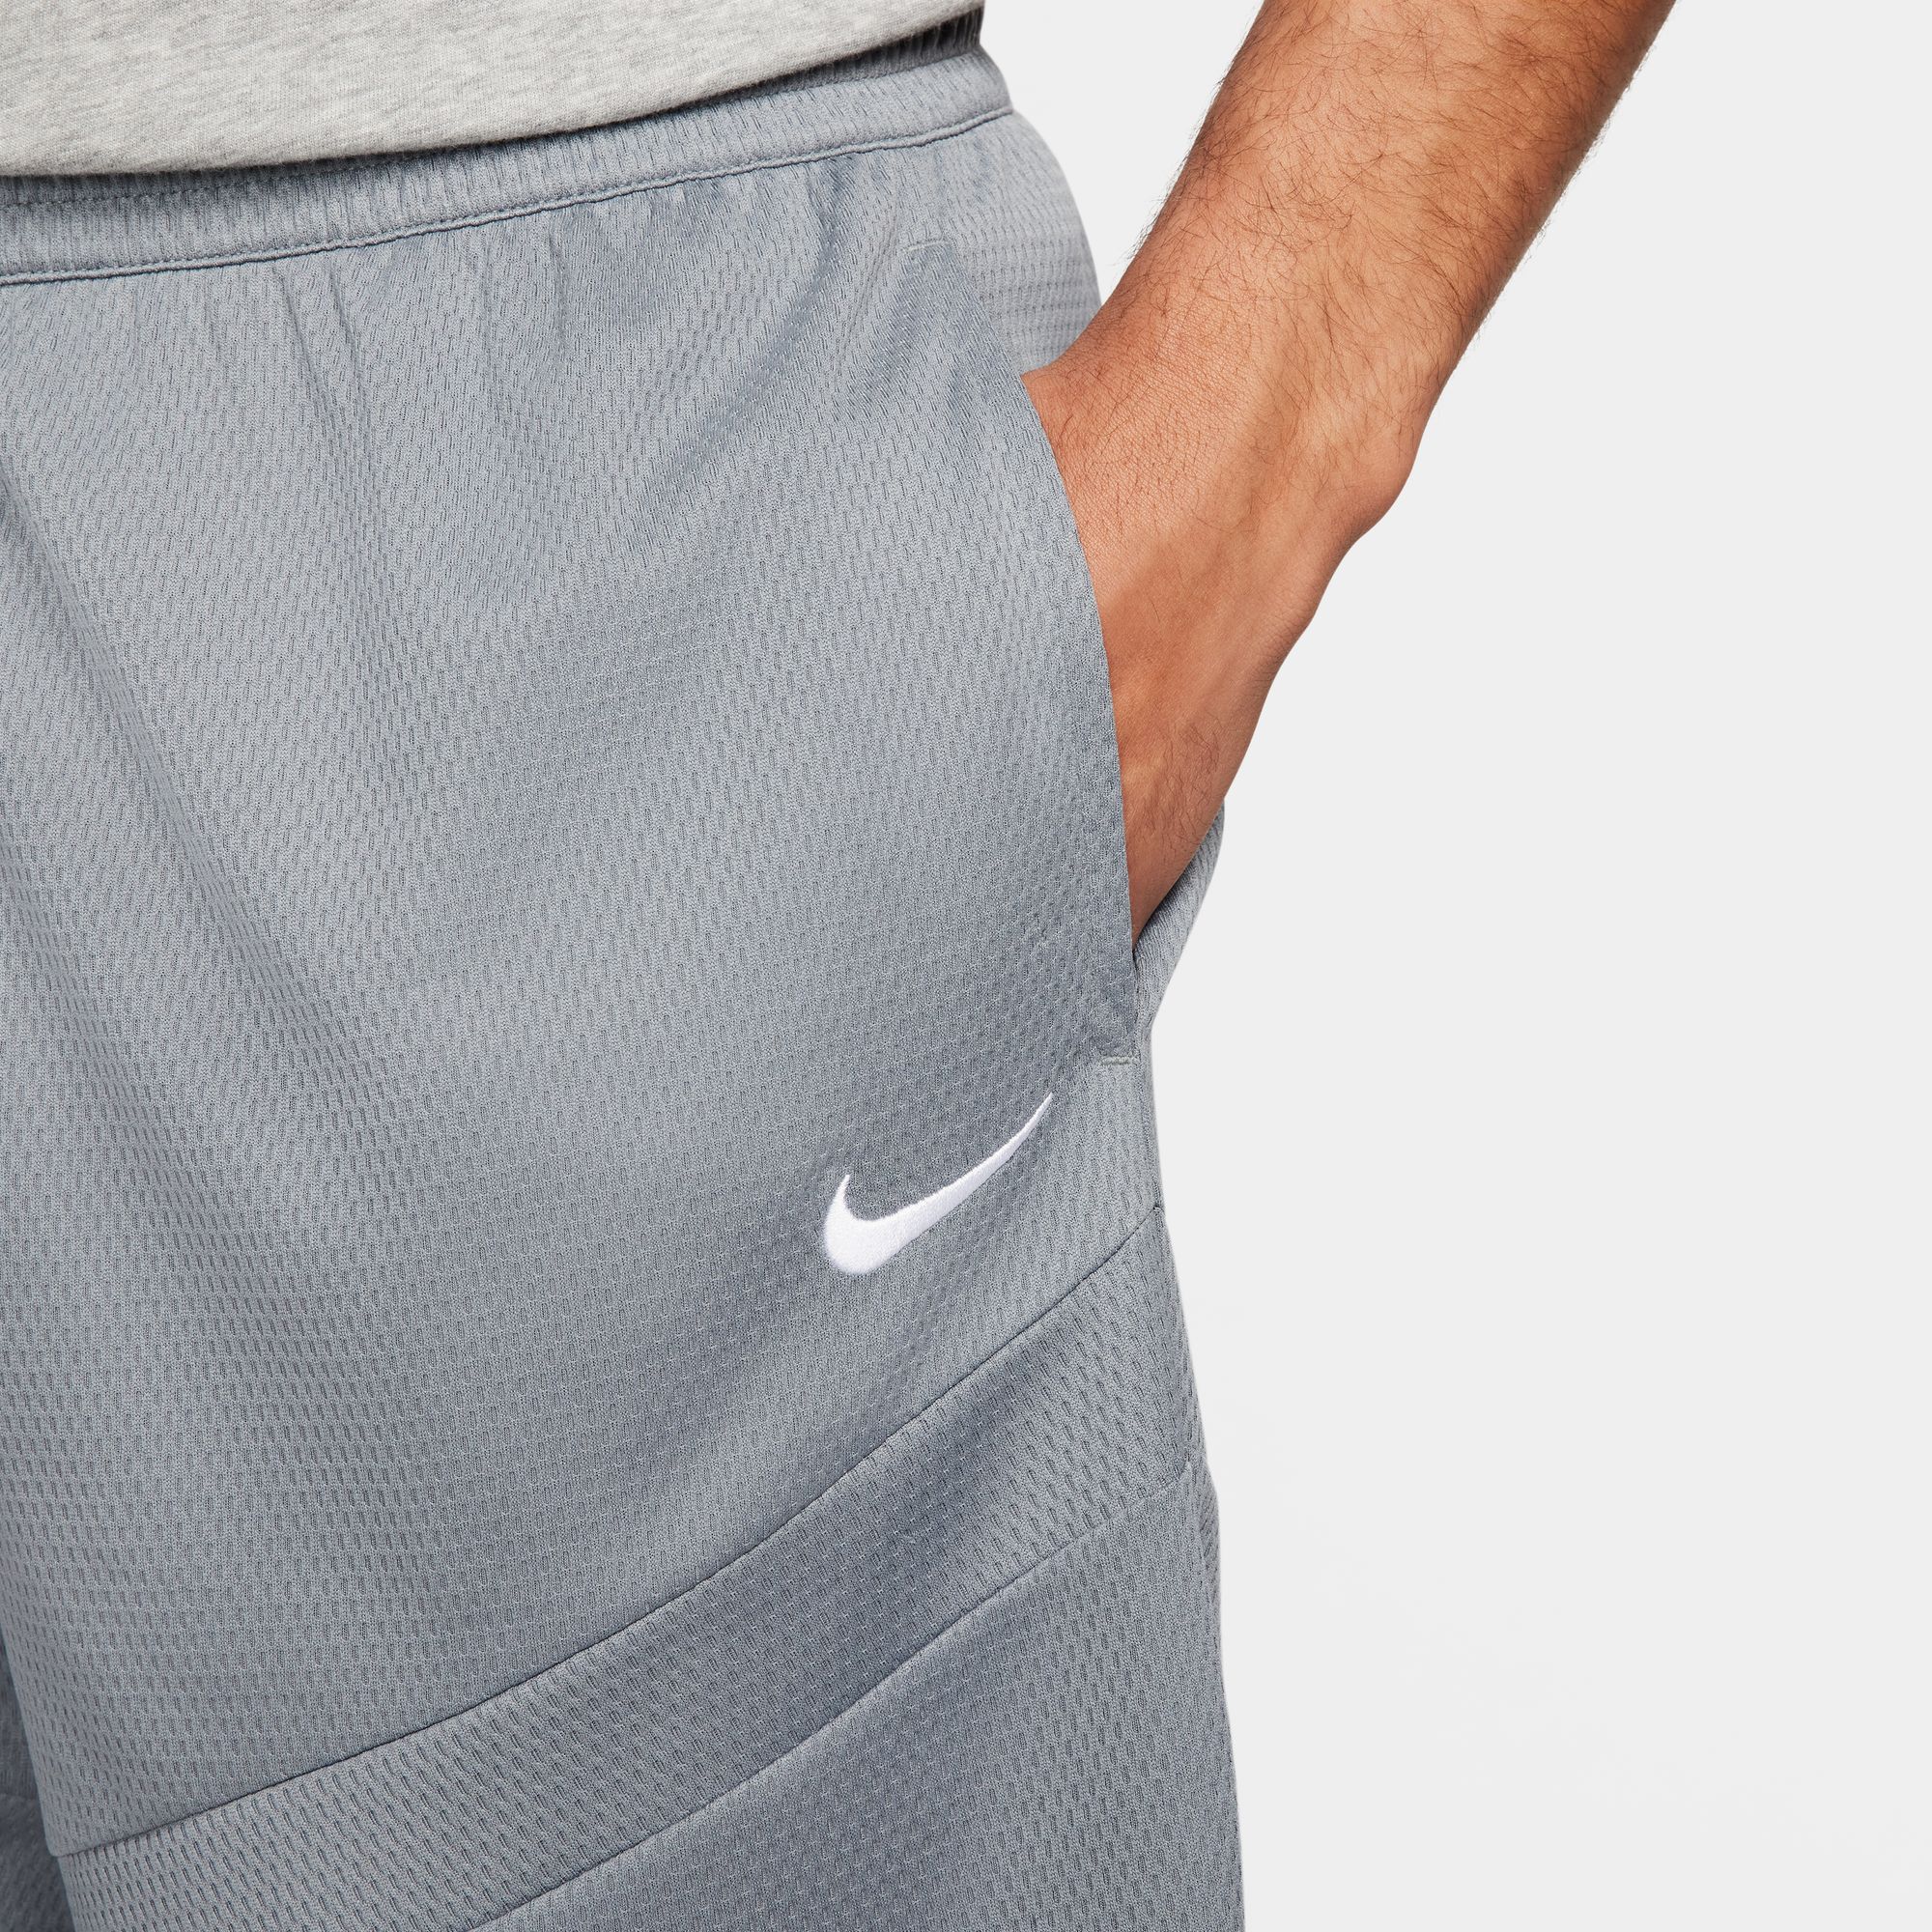 Nike Men's Dri-FIT Icon+ 6" Basketball Shorts